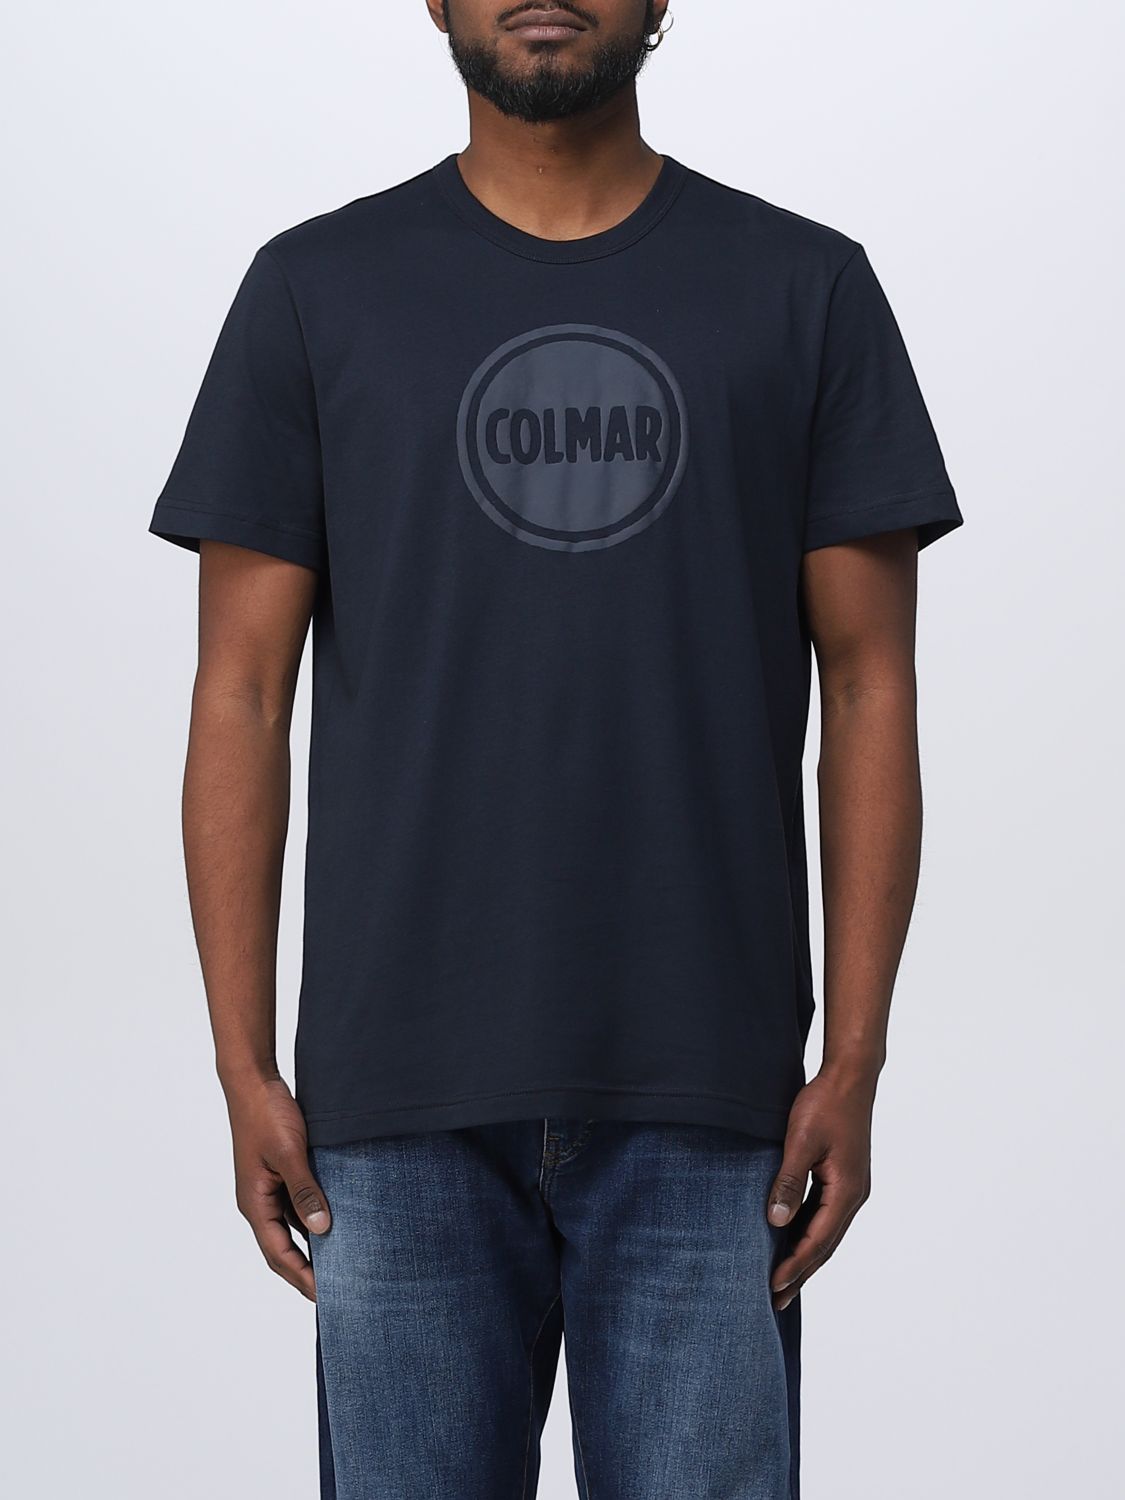 radium Ongunstig Vijfde COLMAR: t-shirt for man - Navy | Colmar t-shirt 75636SH online on GIGLIO.COM